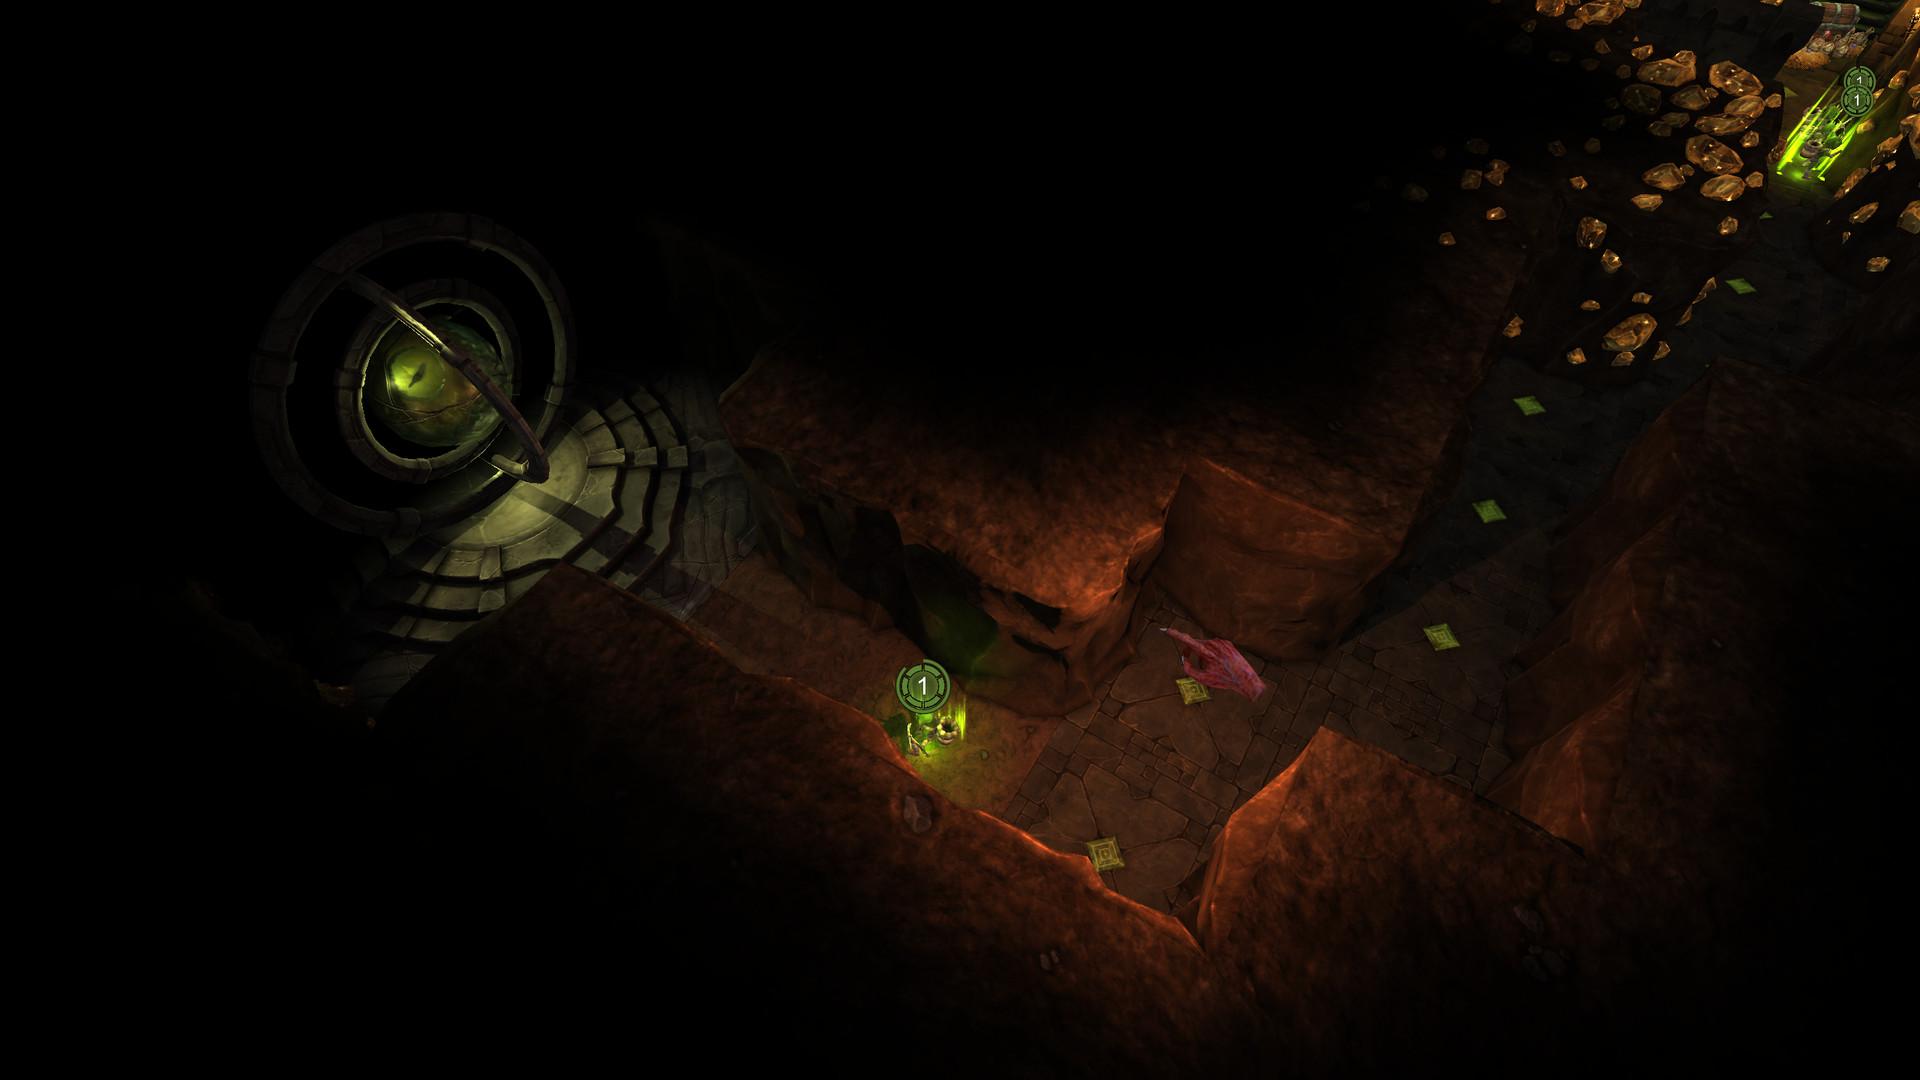 Screenshot №2 from game War for the Overworld